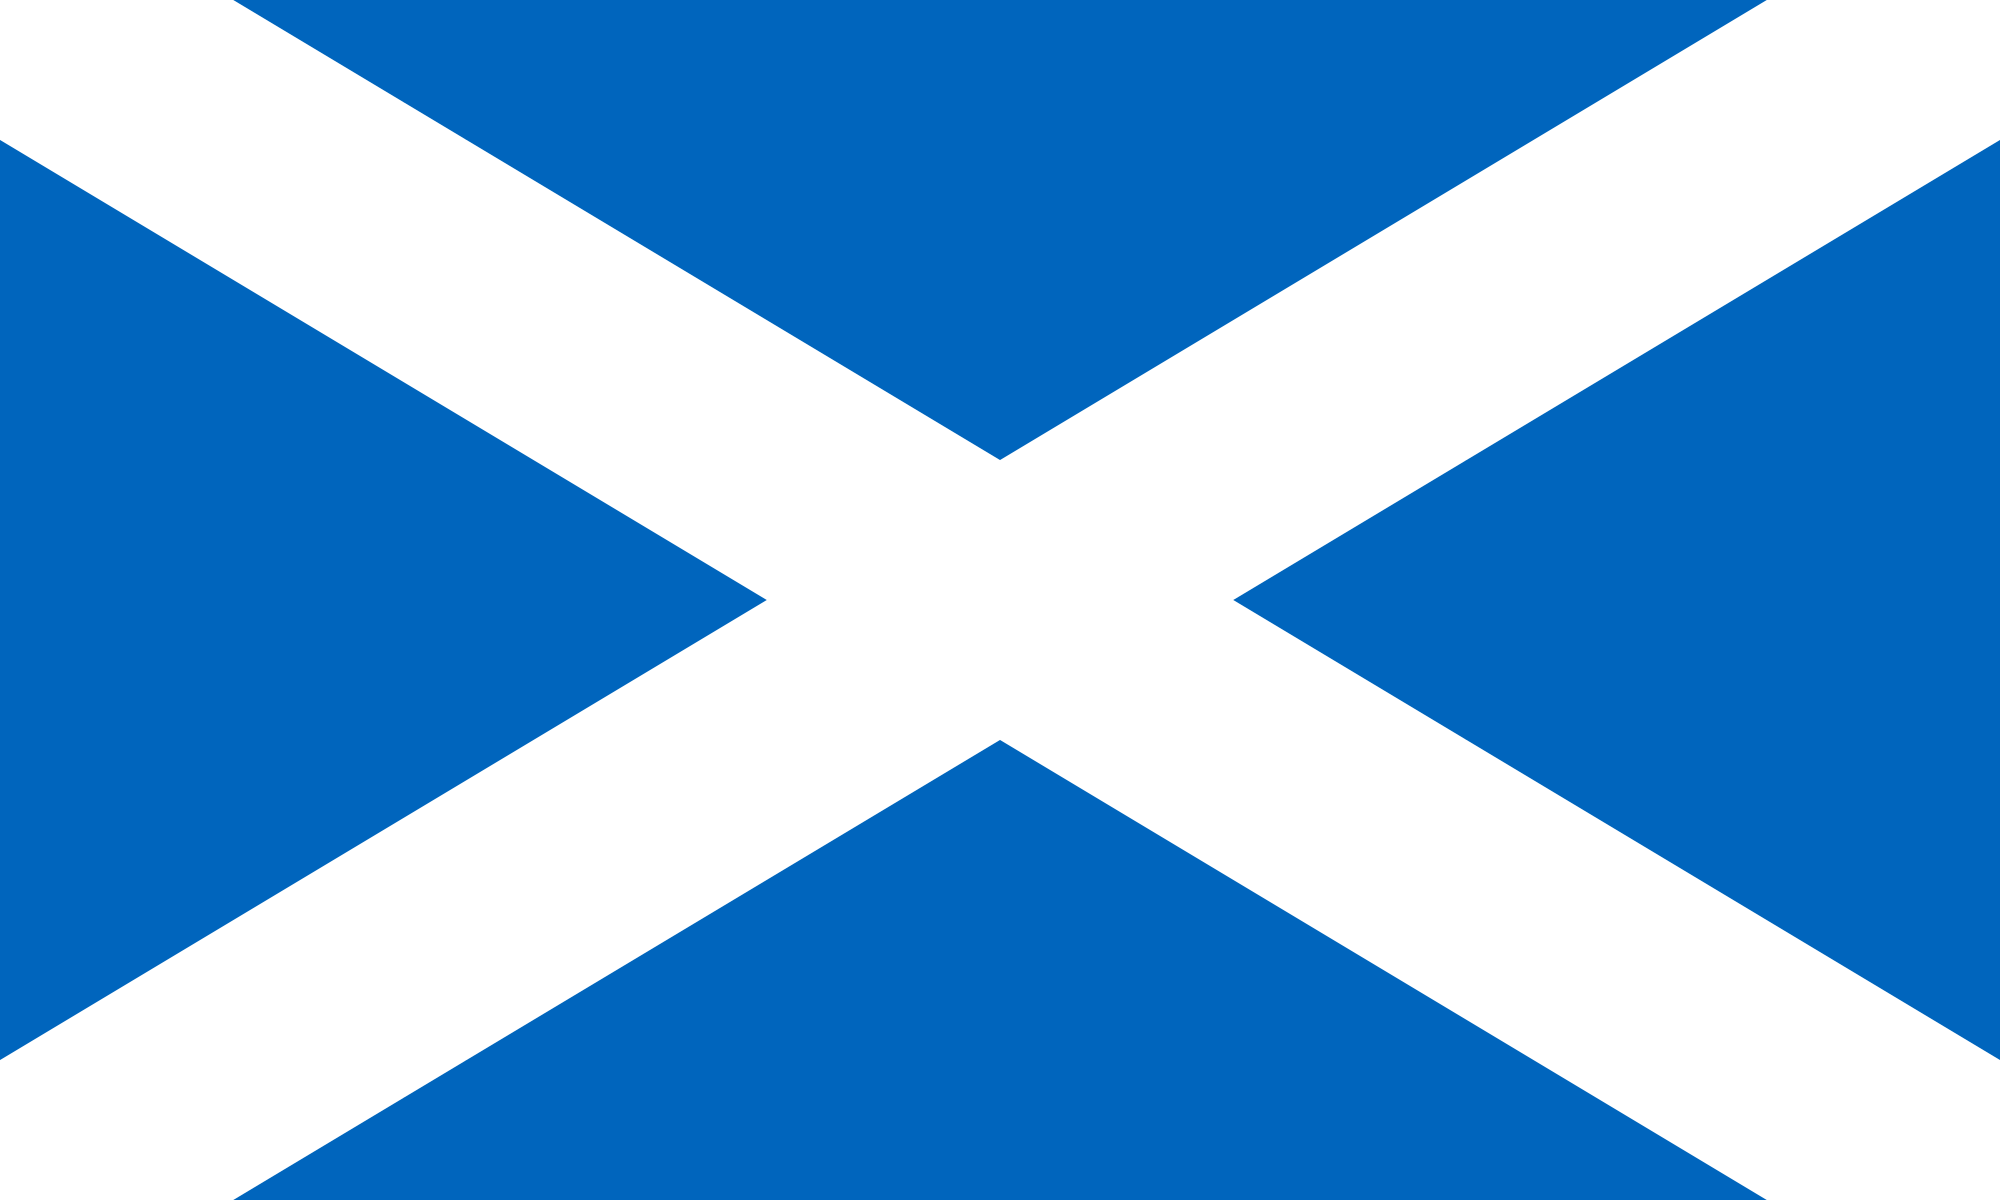 [Image: Flag of Scotland]